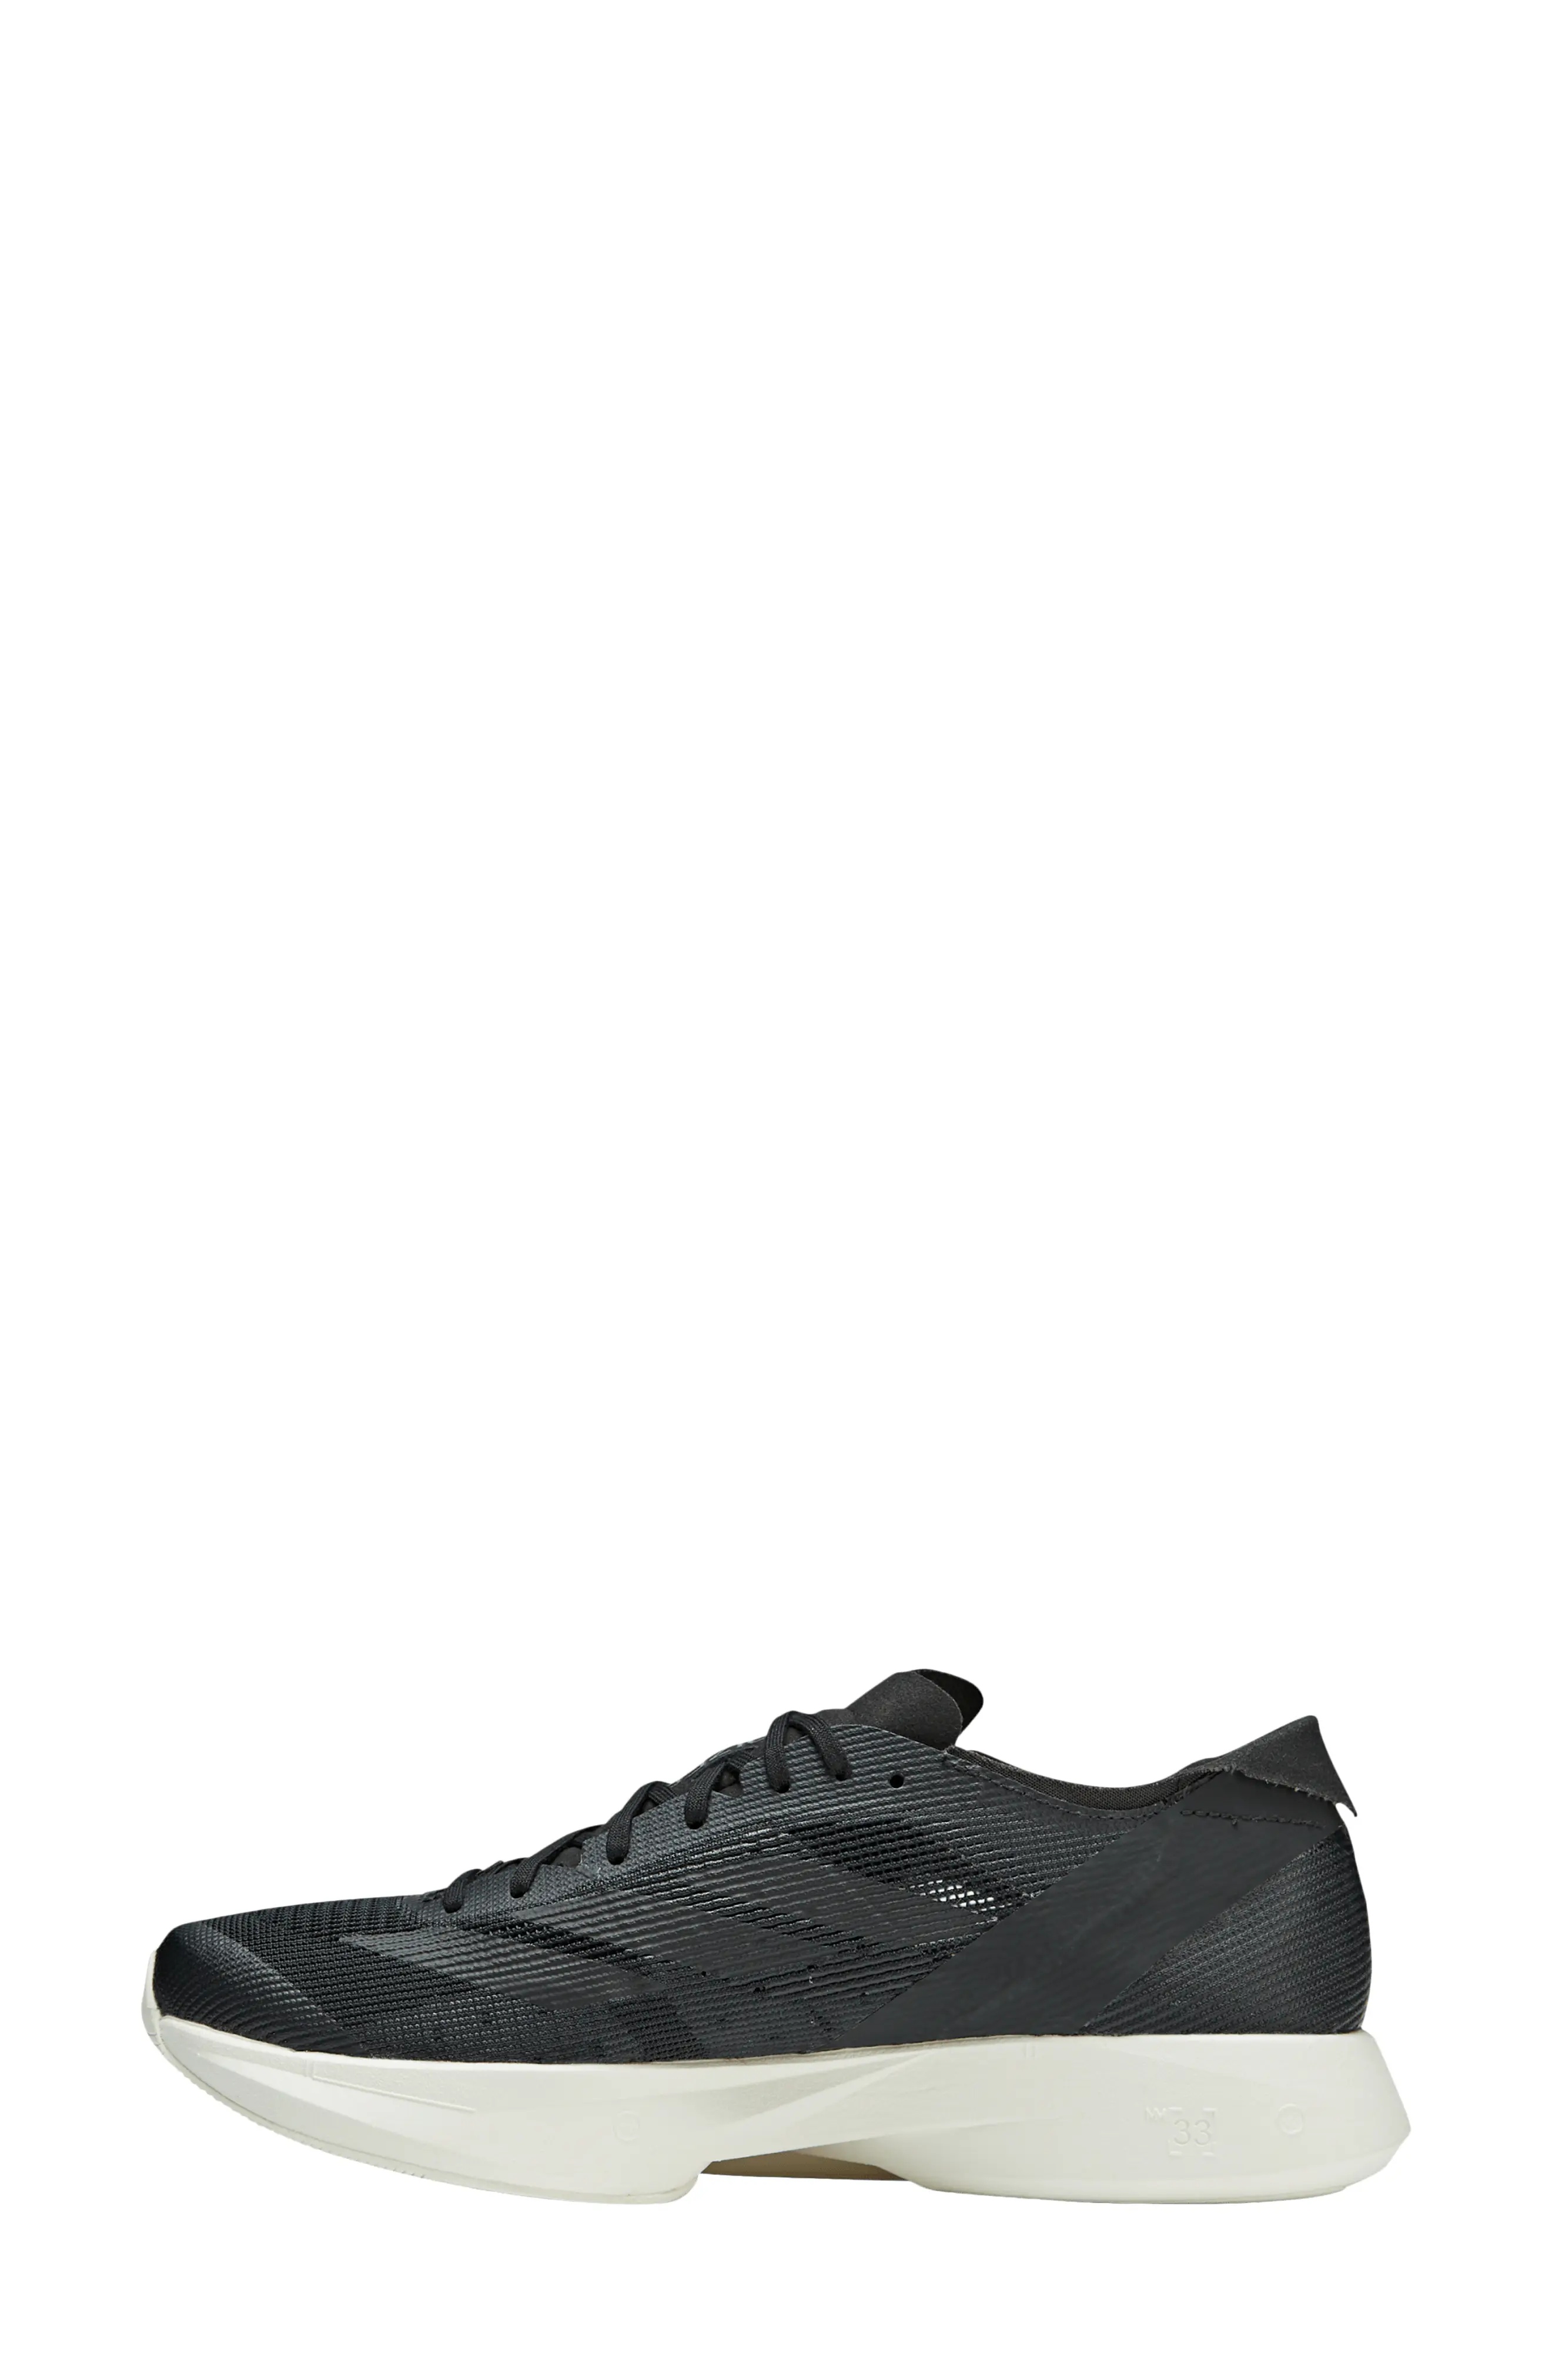 Takumi Sen 10 Running Shoe in Black/Black/Off White - 6